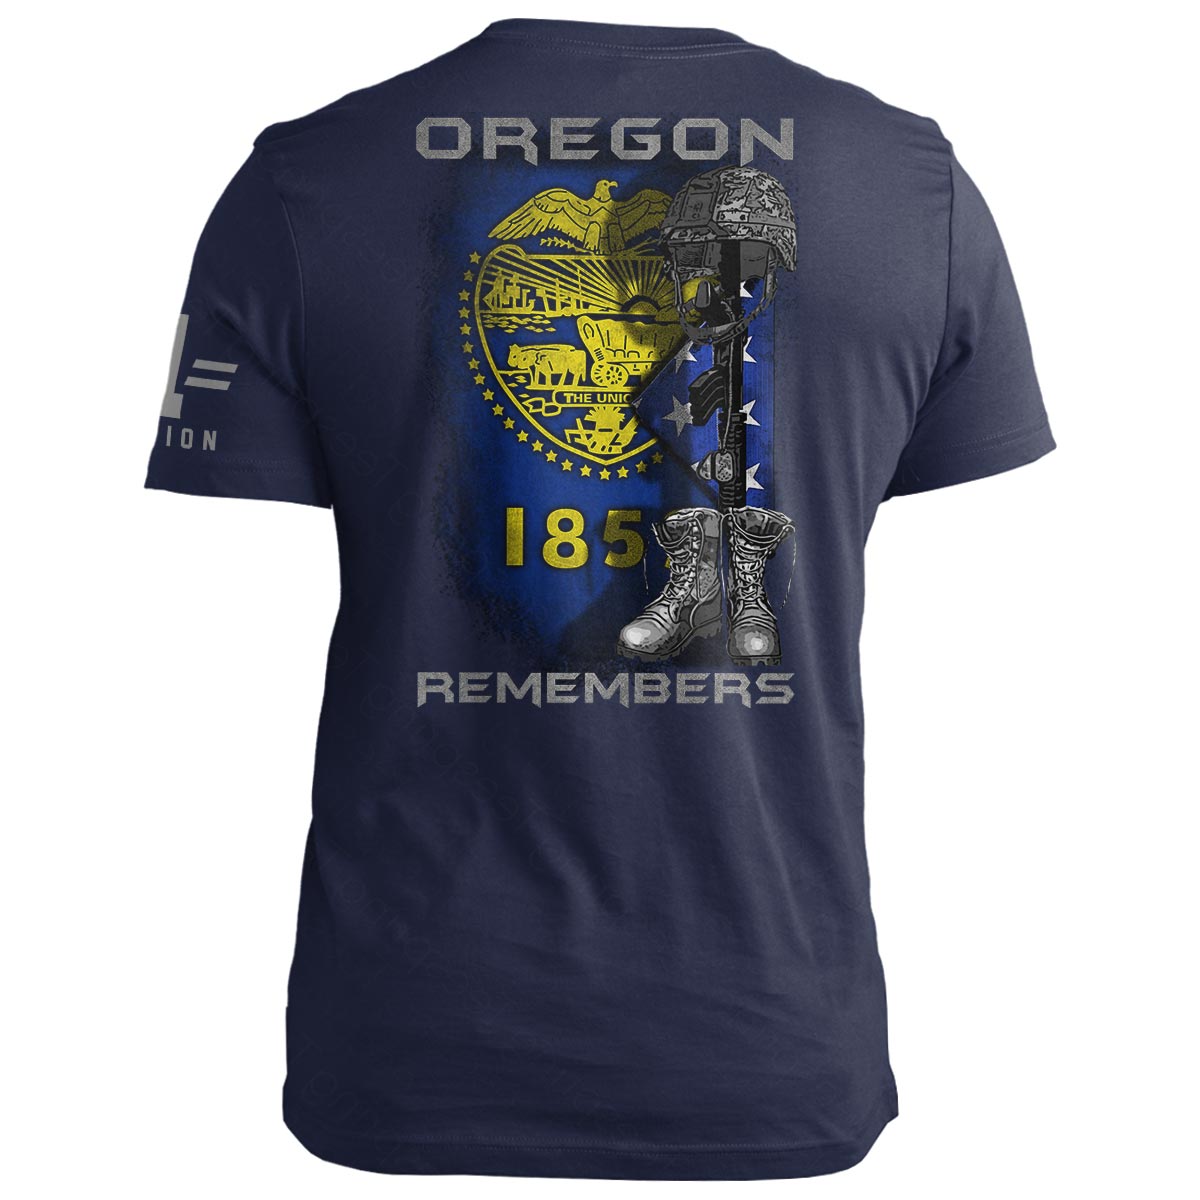 Oregon Remembers